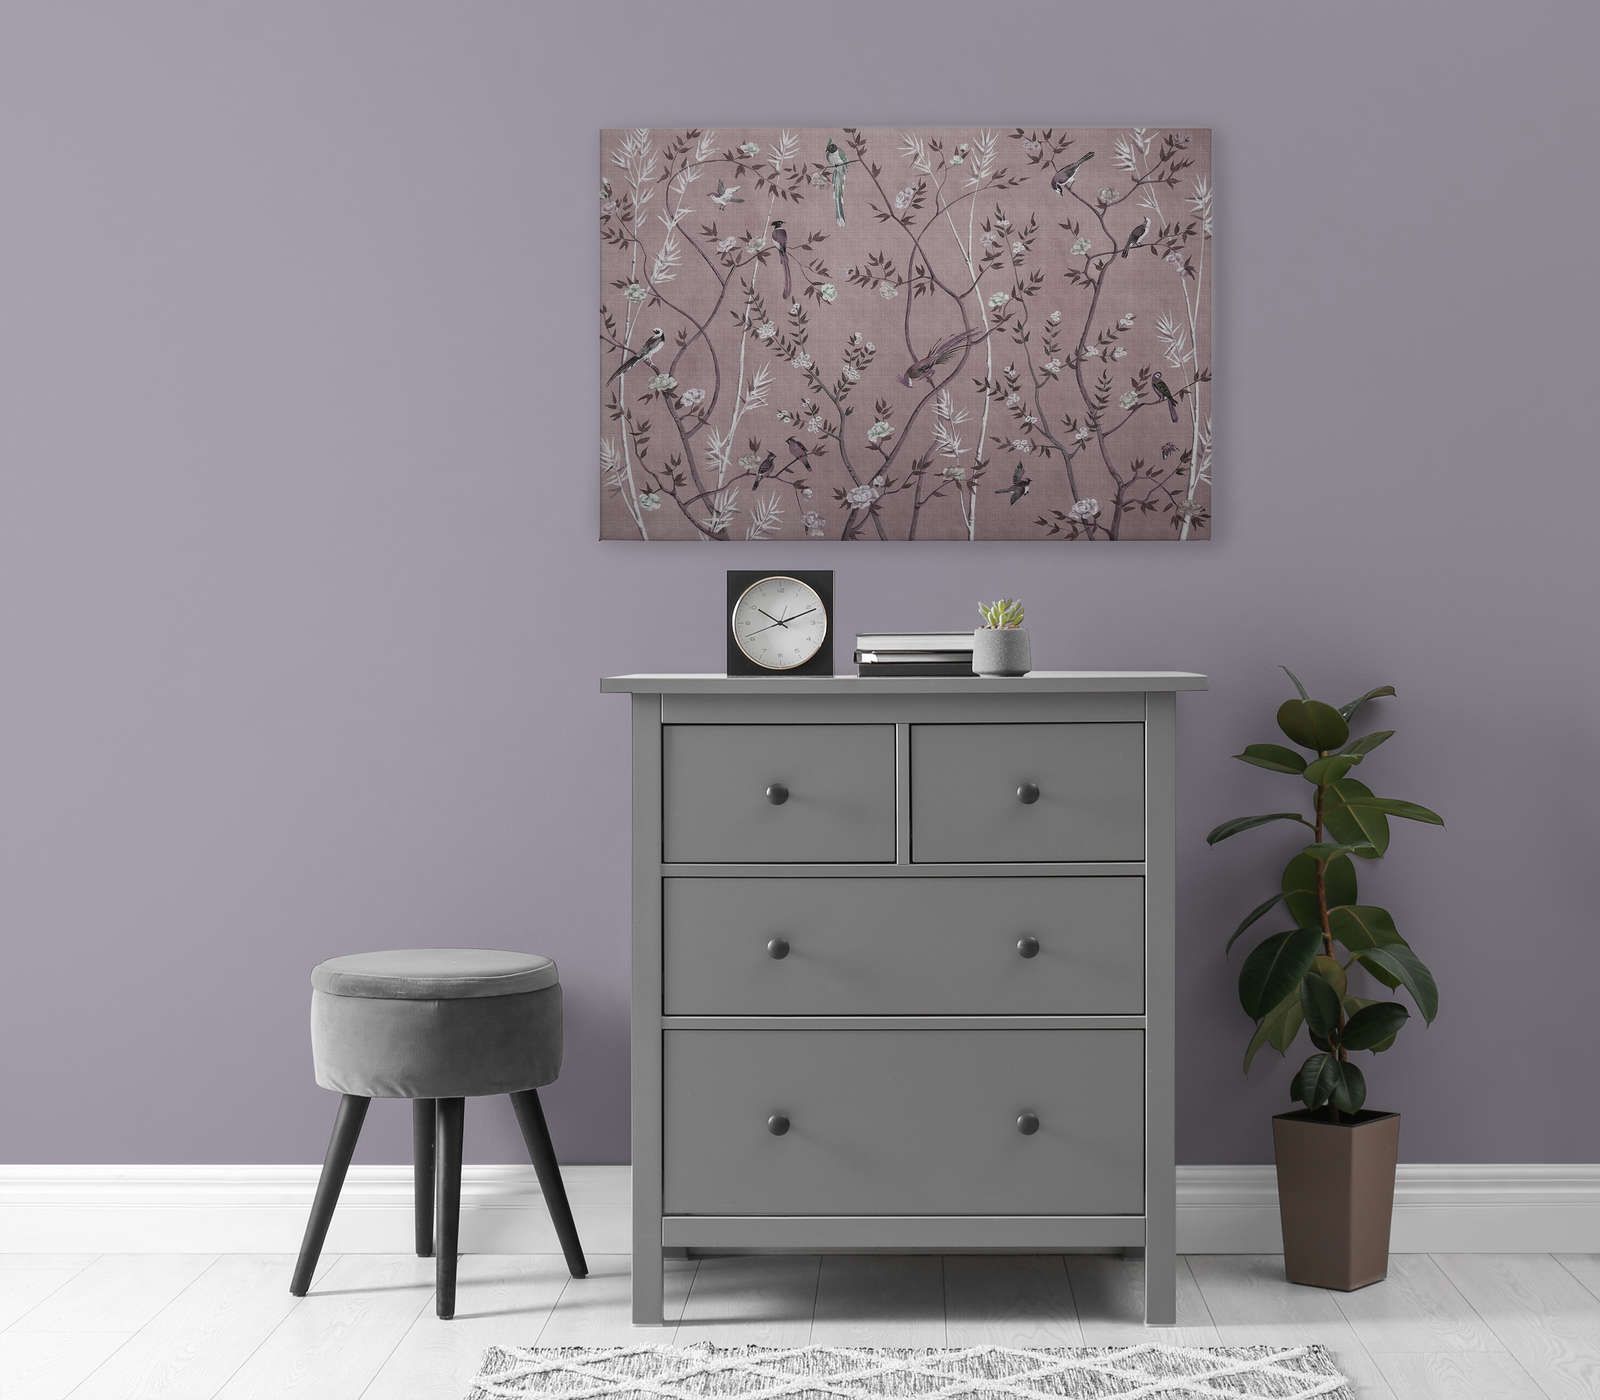             Tea Room 3 - Toile Oiseaux & Fleurs Style rose & blanc - 0,90 m x 0,60 m
        